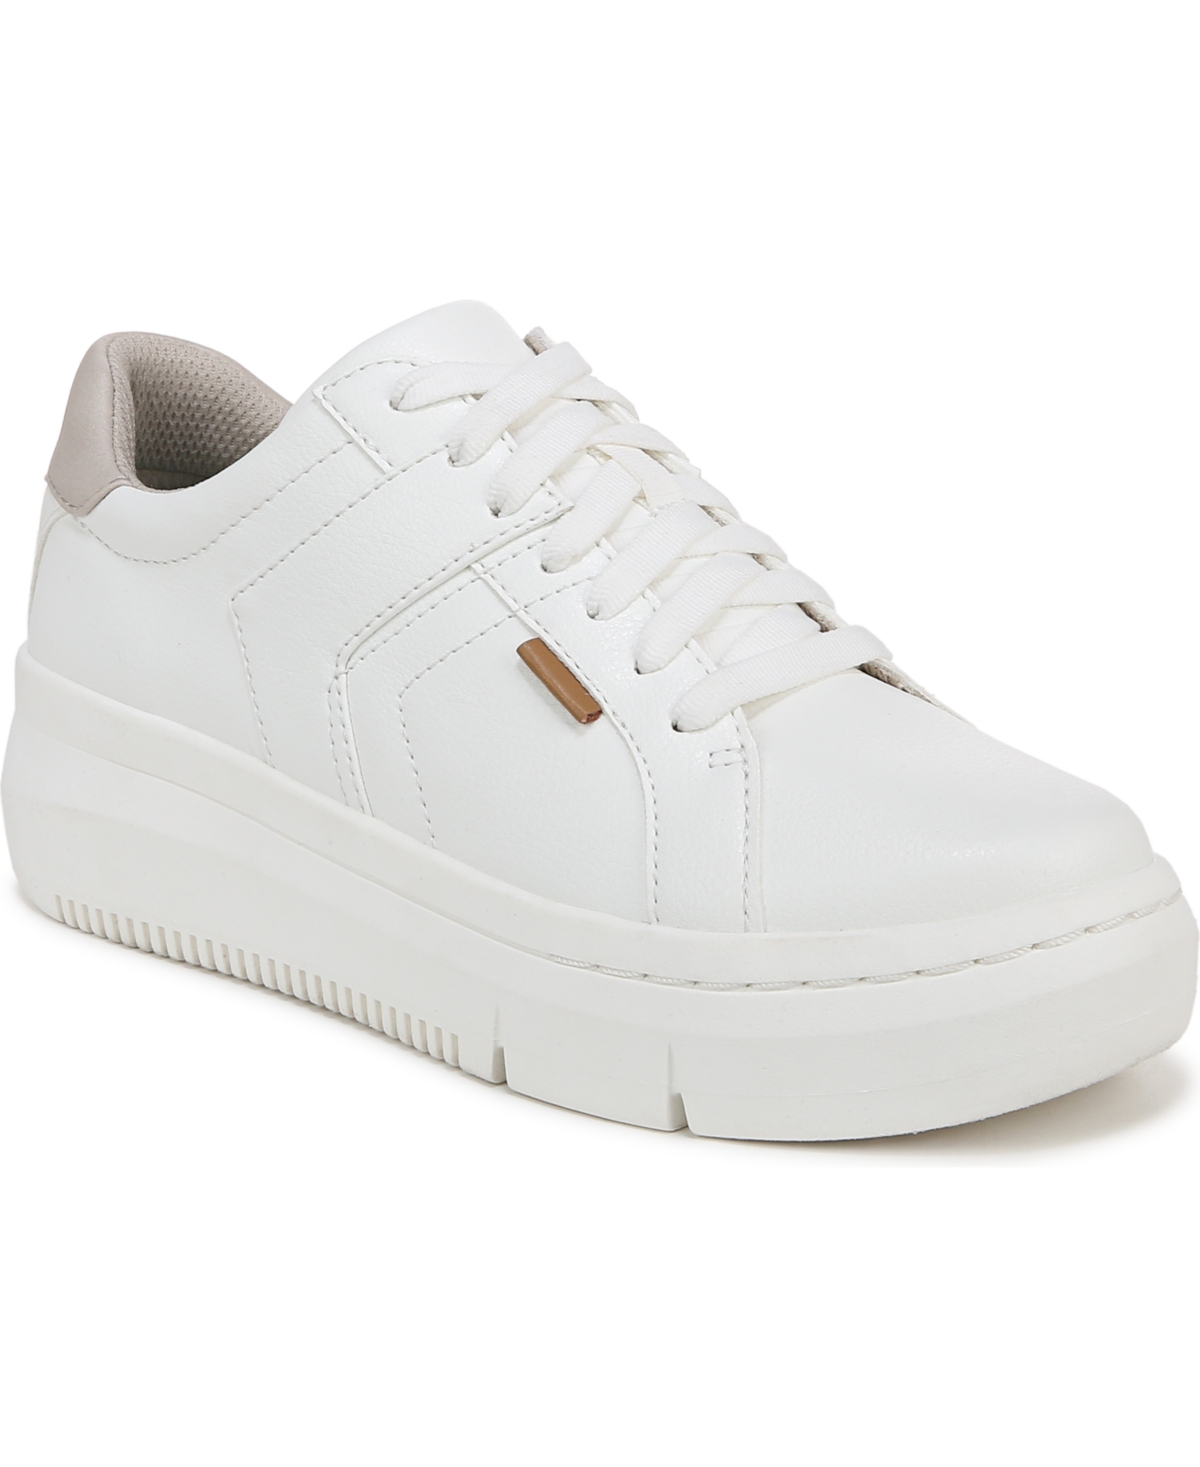 Women's Sadie Platform Sneakers - White Faux Leather